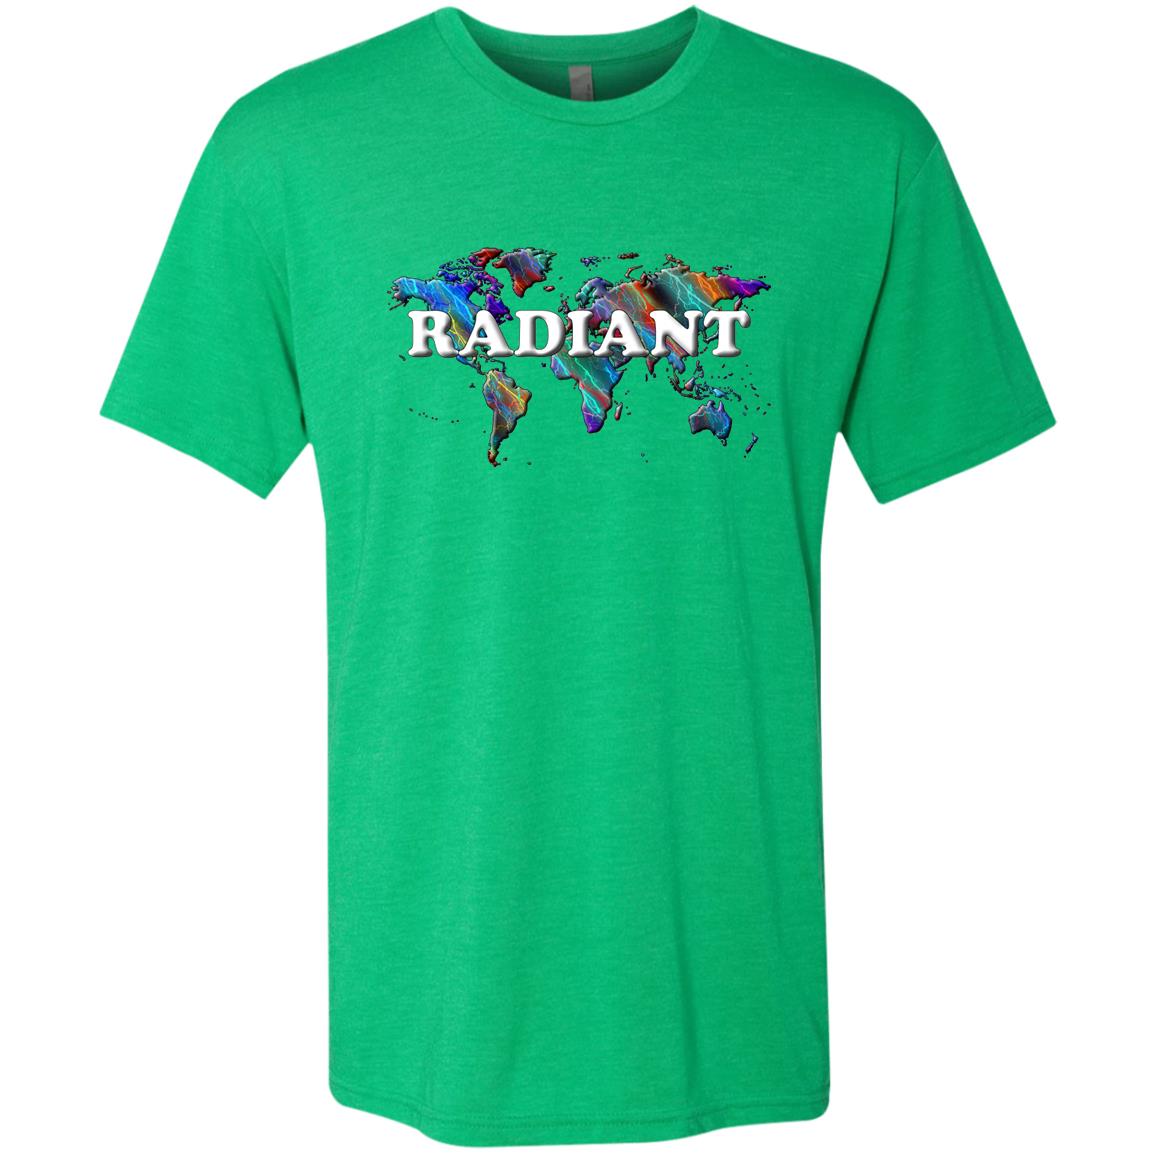 Radiant T-Shirt 